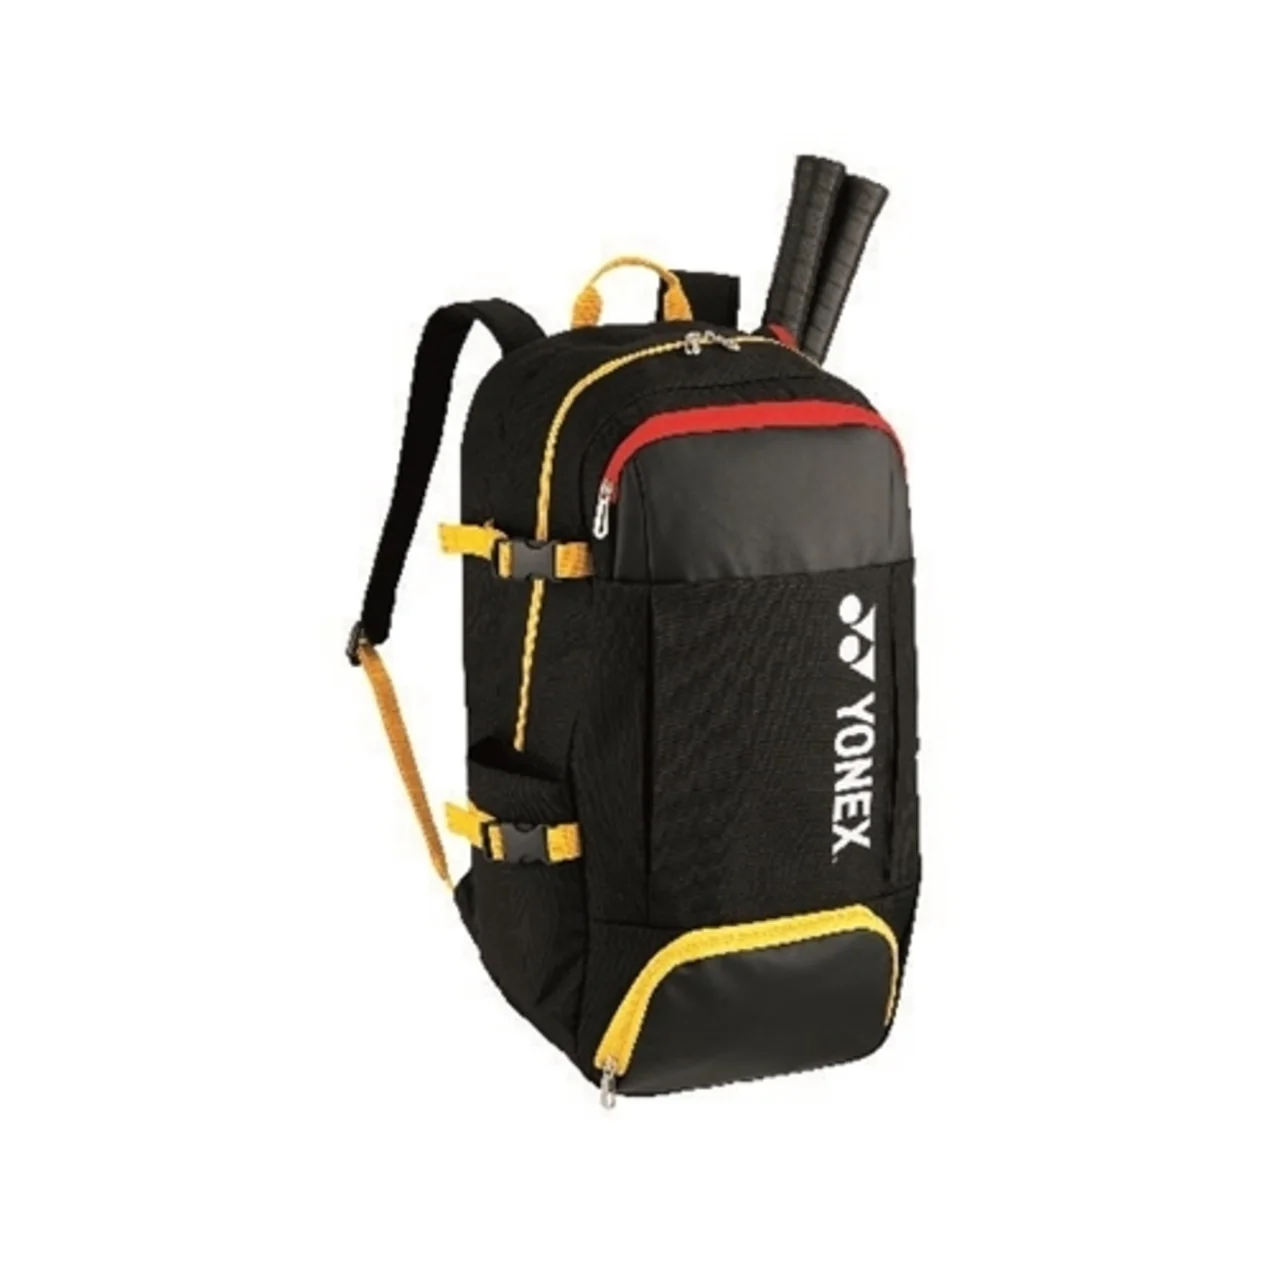 Yonex Active Backpack Large Black 2020